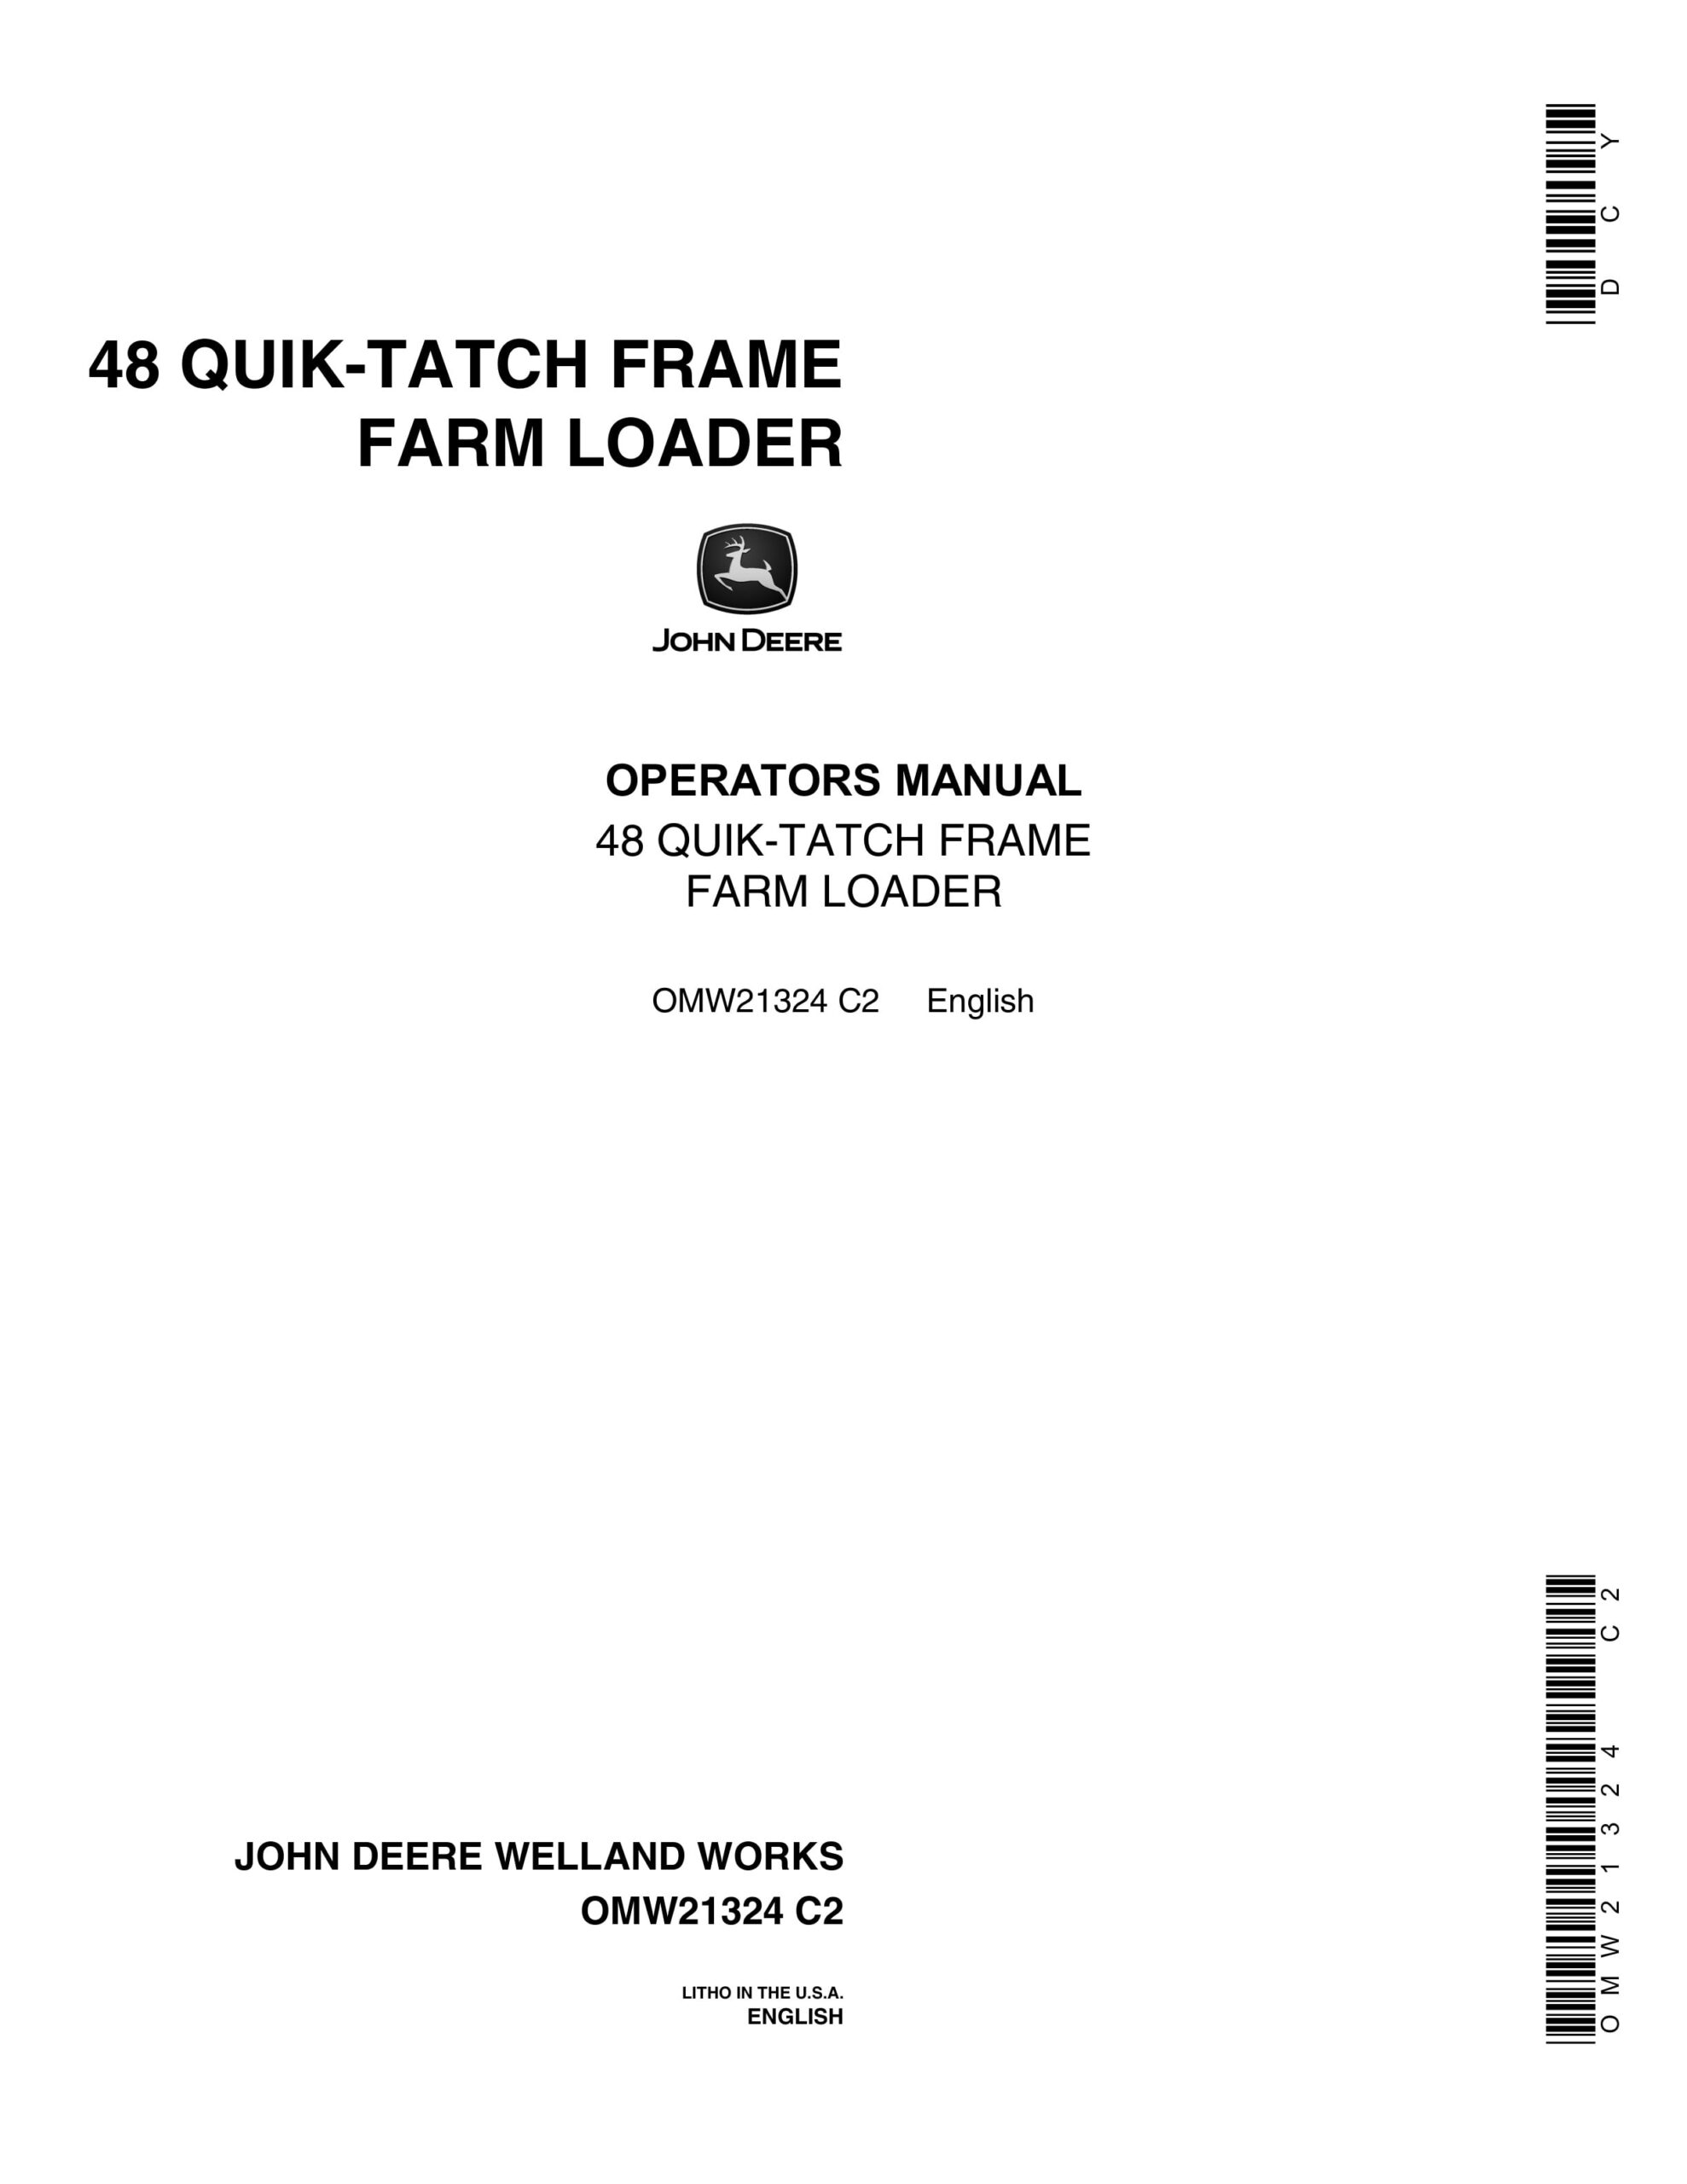 John Deere 48 QUIK-TATCH FRAME FARM LOADERS Operator Manual OMW21324-1